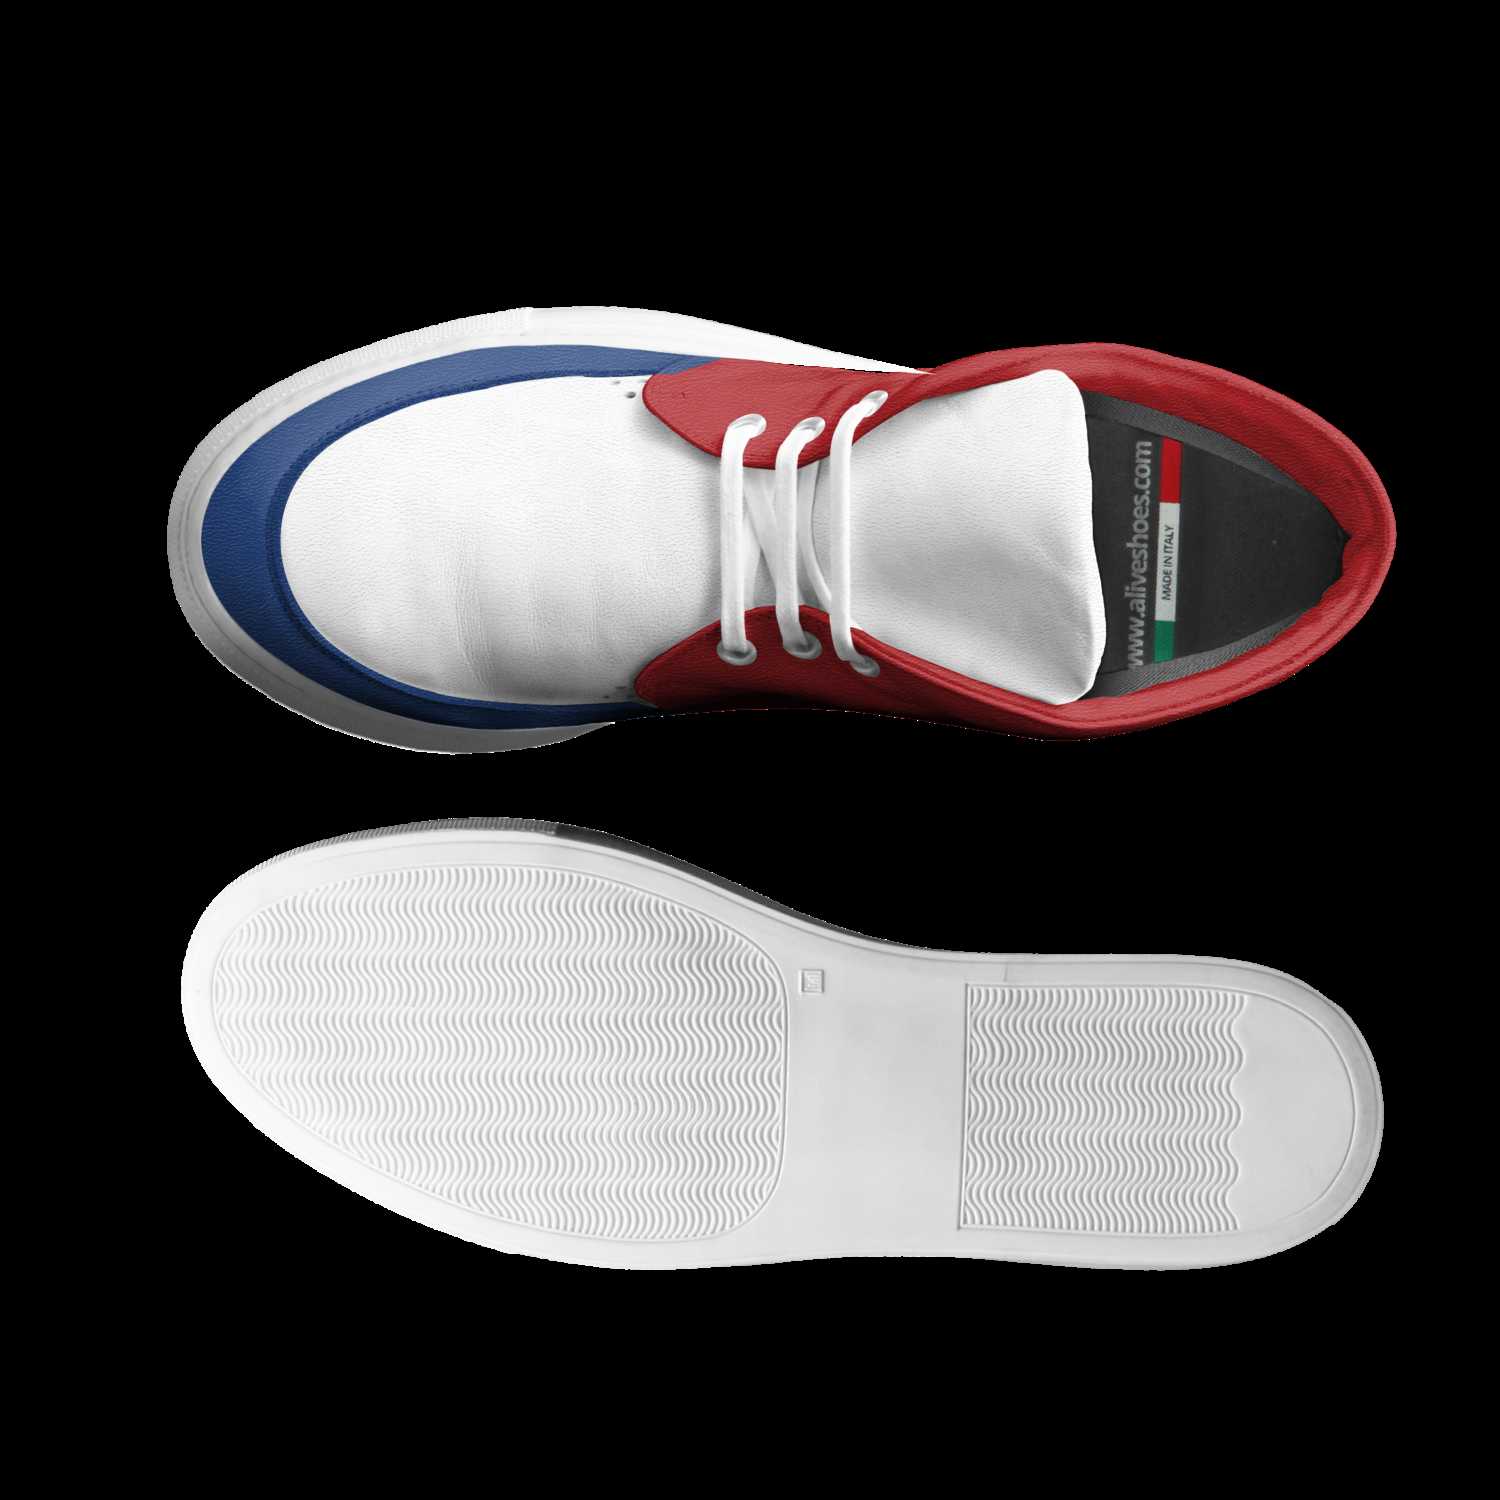 A Custom Shoe concept by Boubker Sadmi